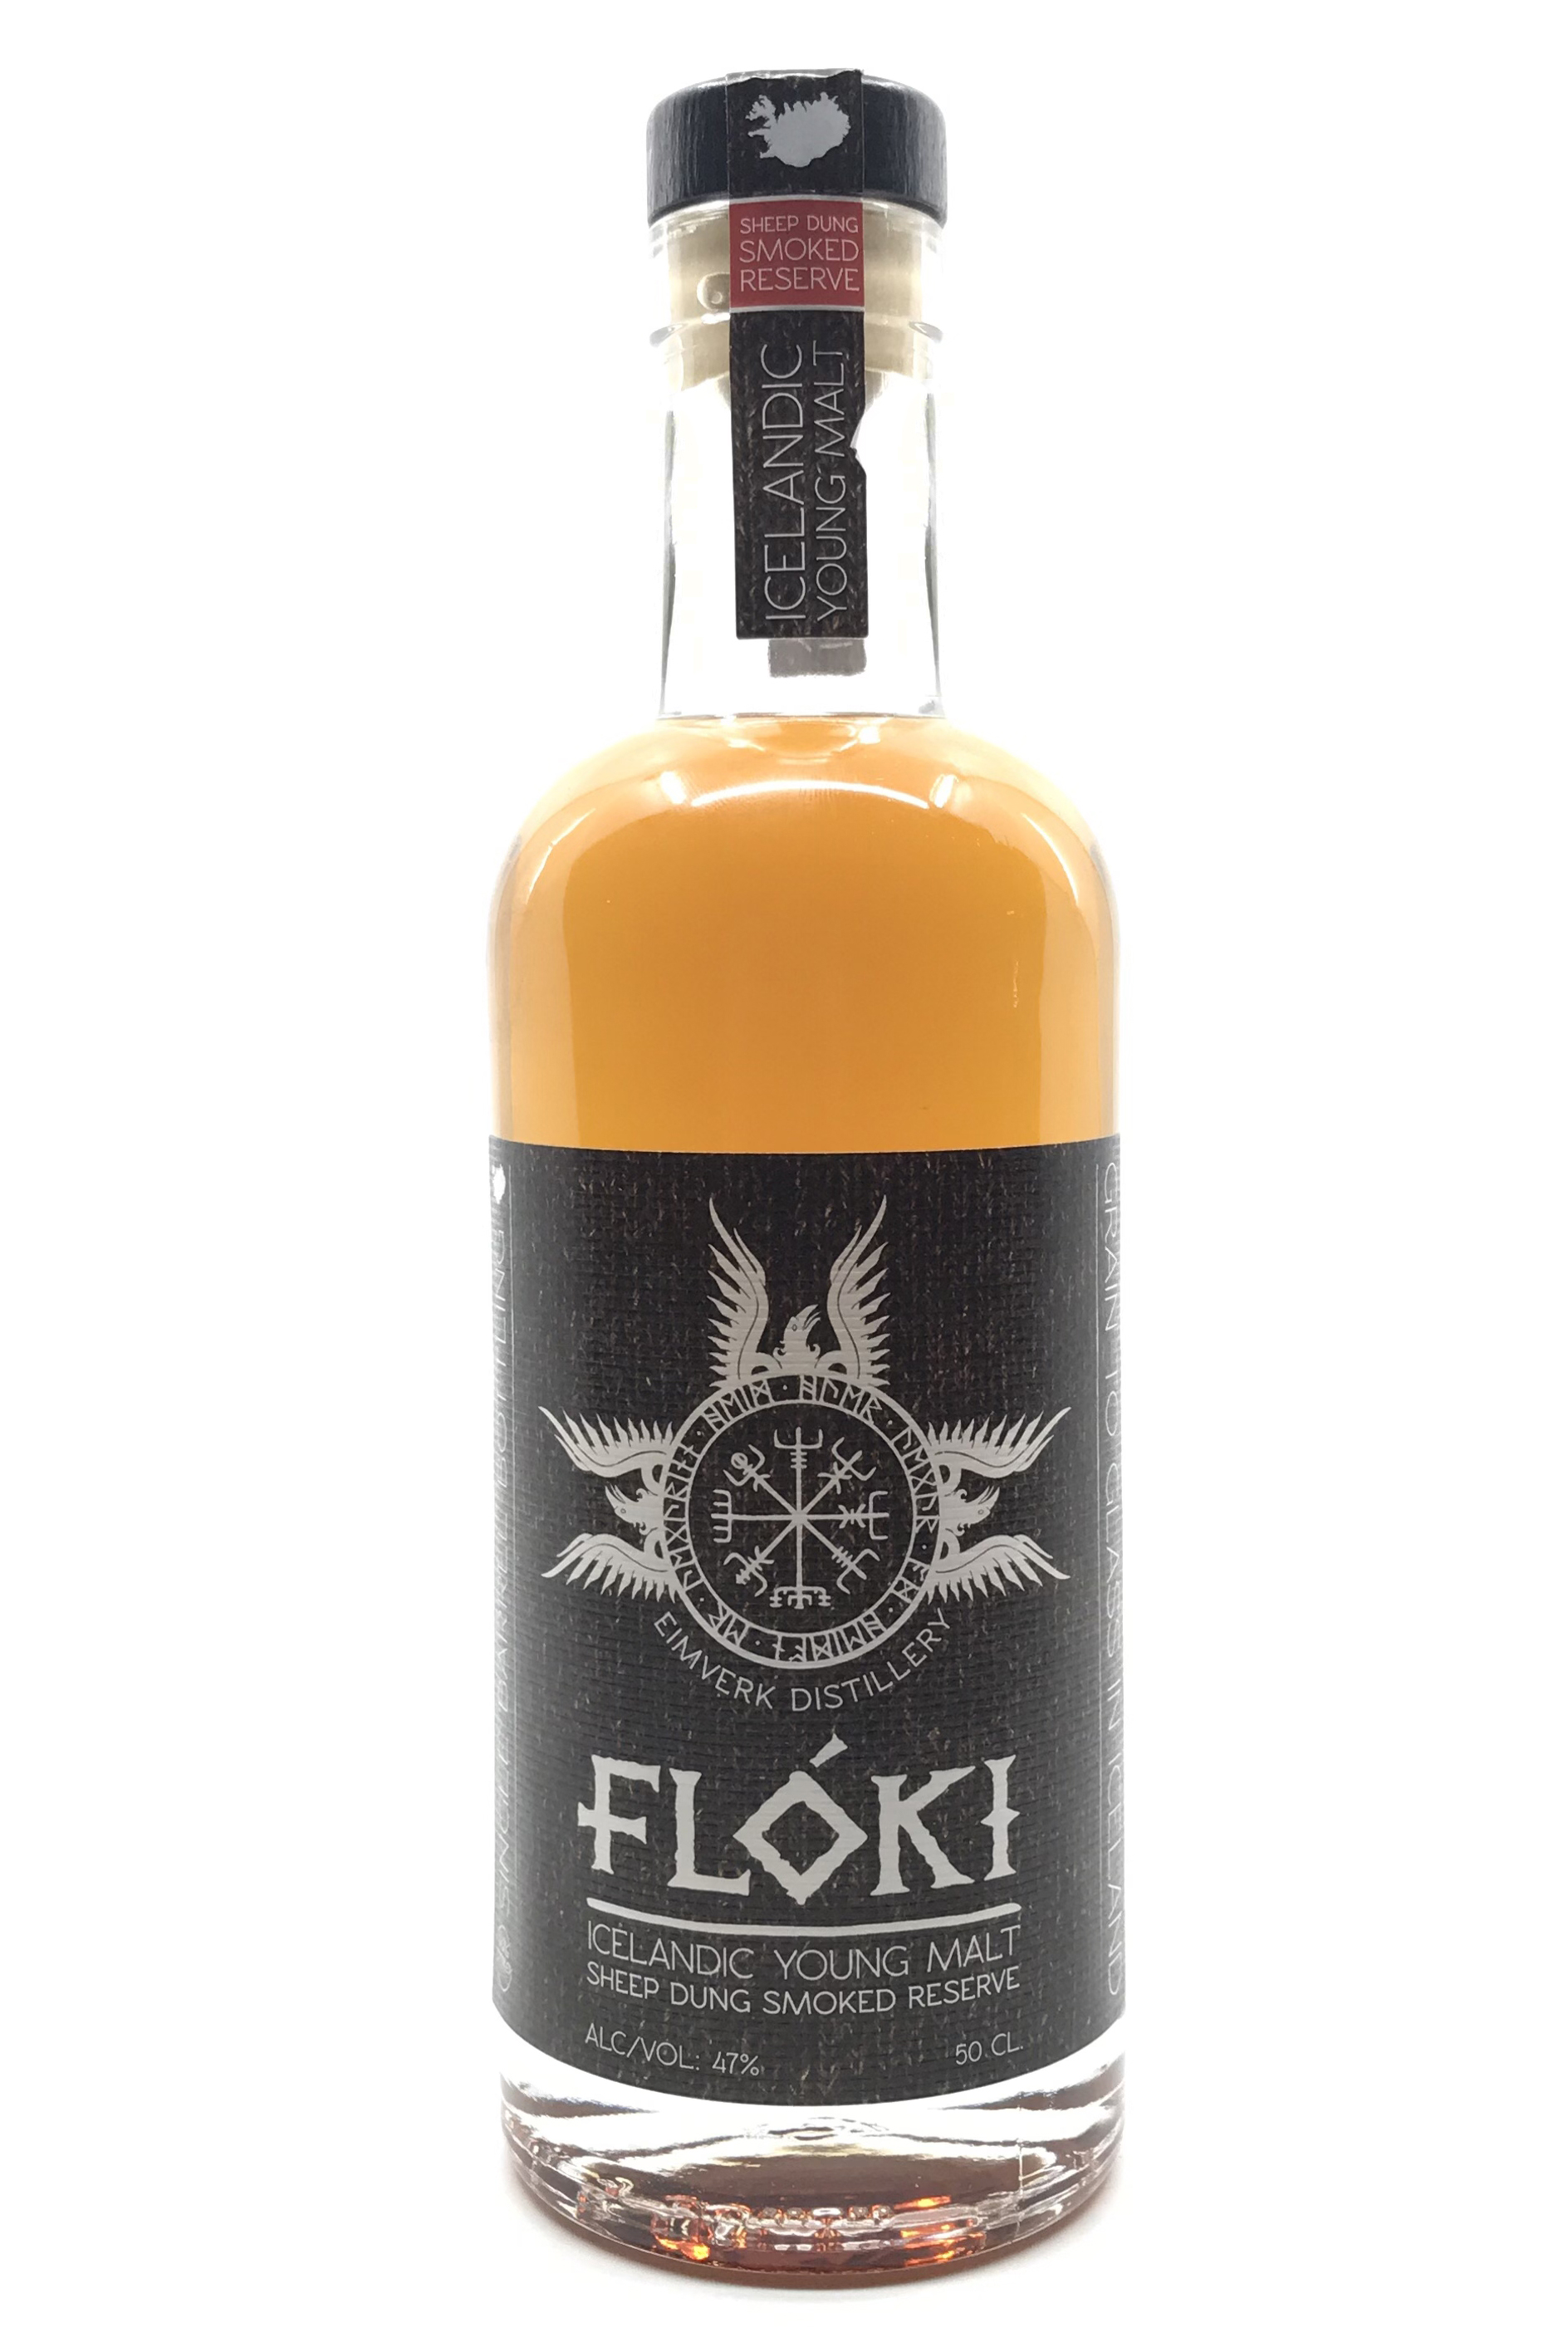 Floki Icelandic Sheep Dung Young Malt Whisky - 47% vol. Alk. - 0,5l - Whisky aus Island - Front